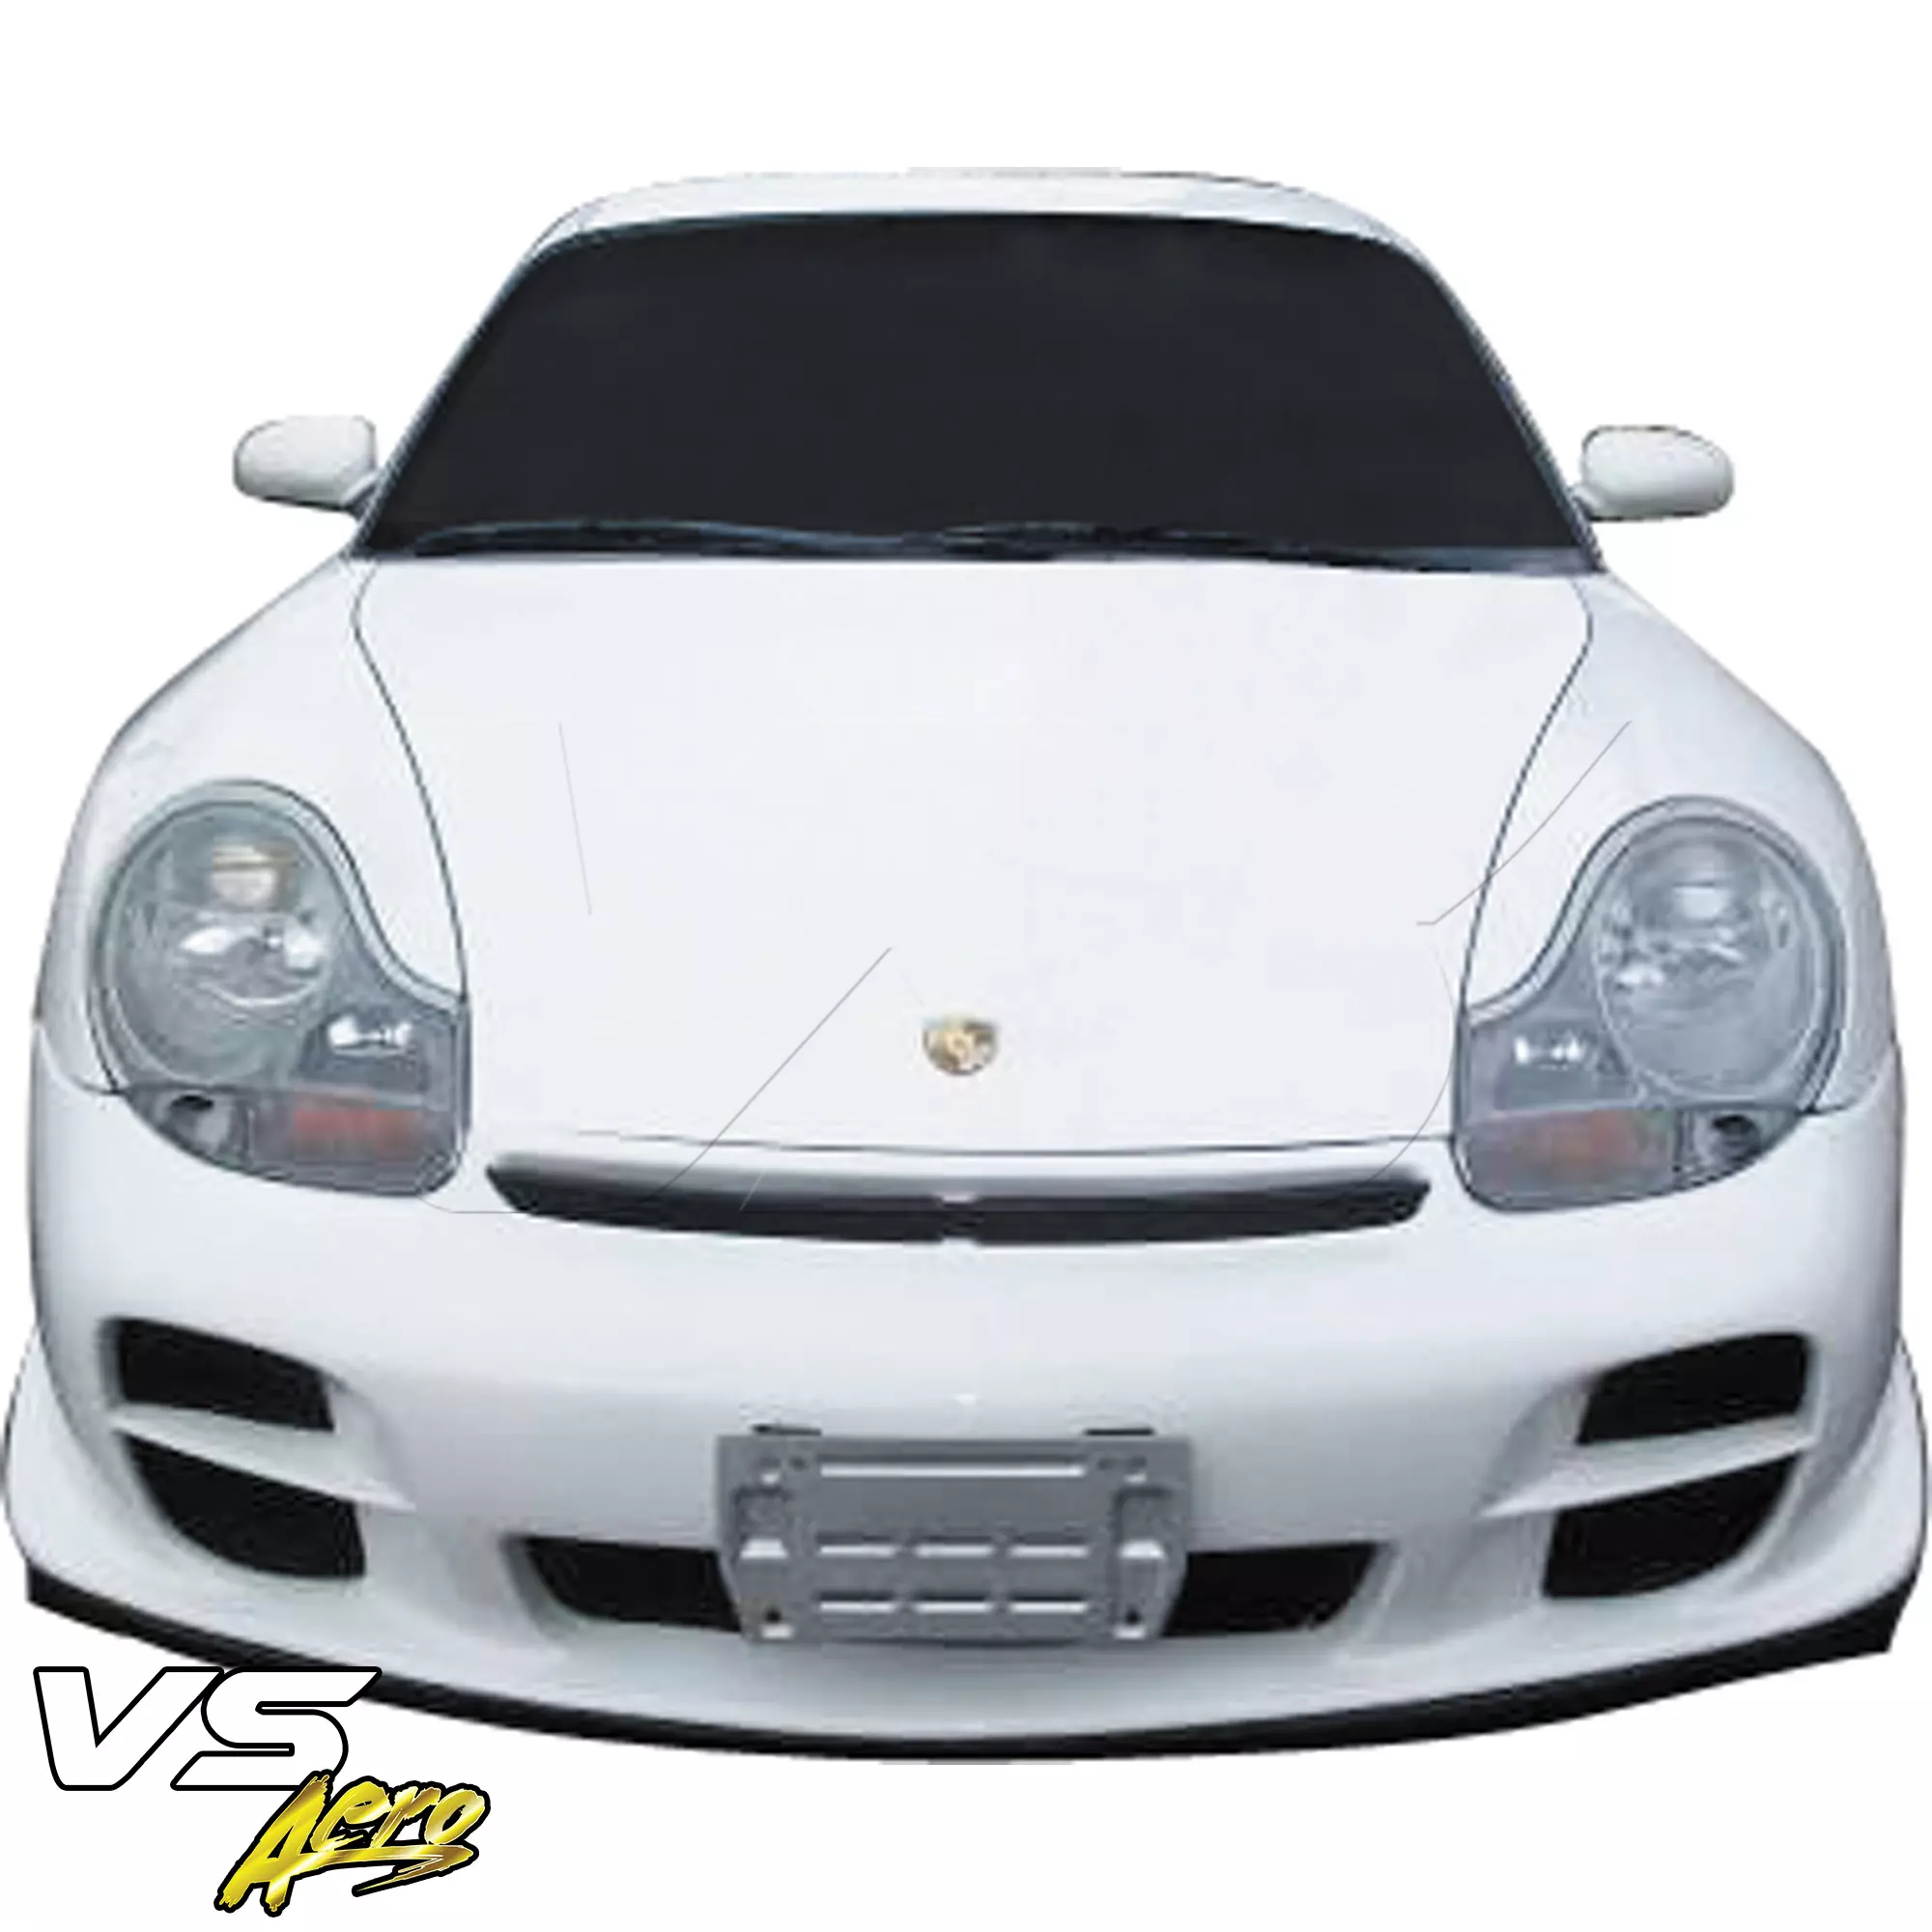 VSaero FRP GT2 Body Kit 3pc > Porsche Boxster 986 1997-2004 - Image 4